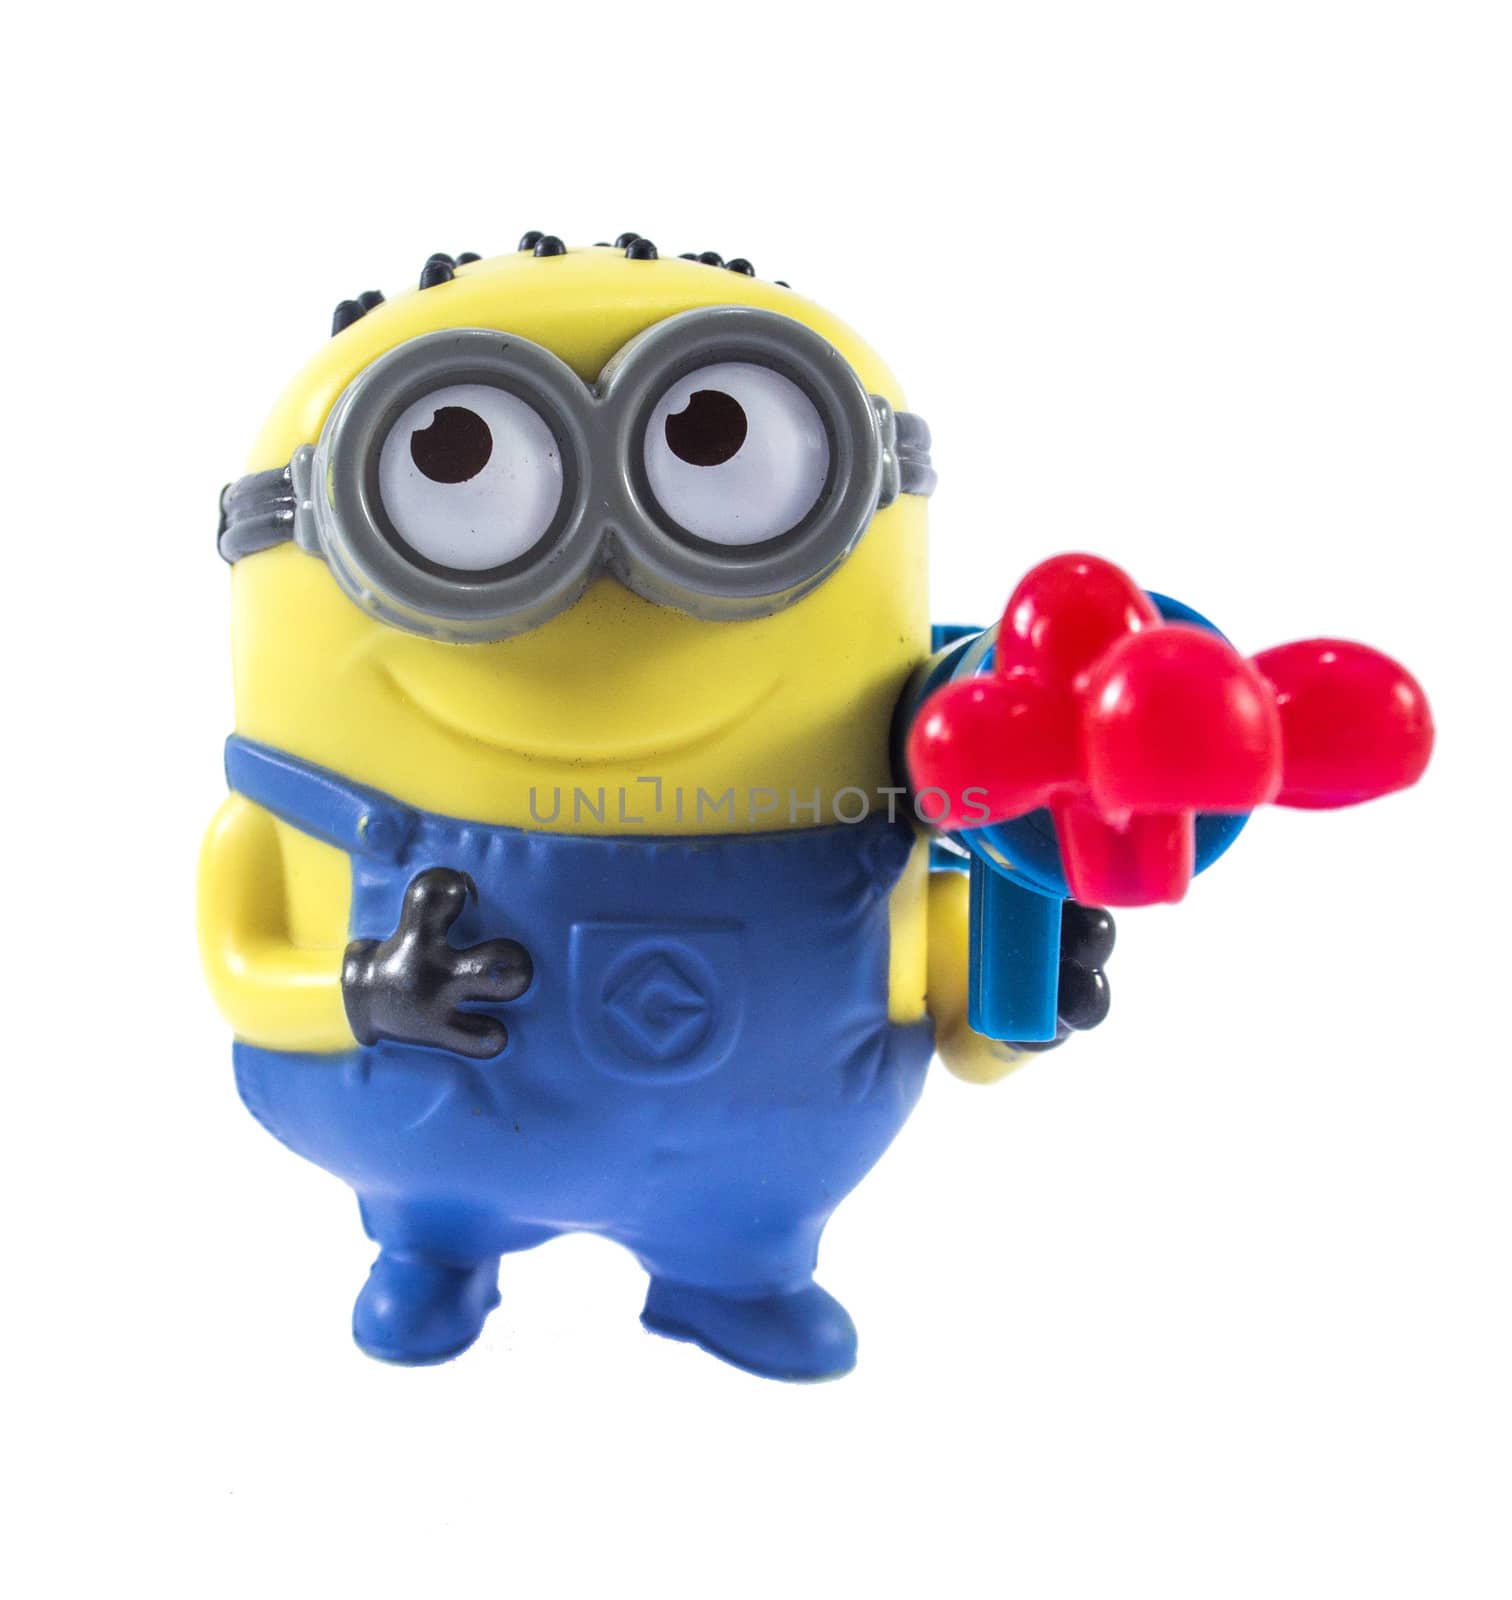 Minion Stuart Blaster toy figure by designsstock